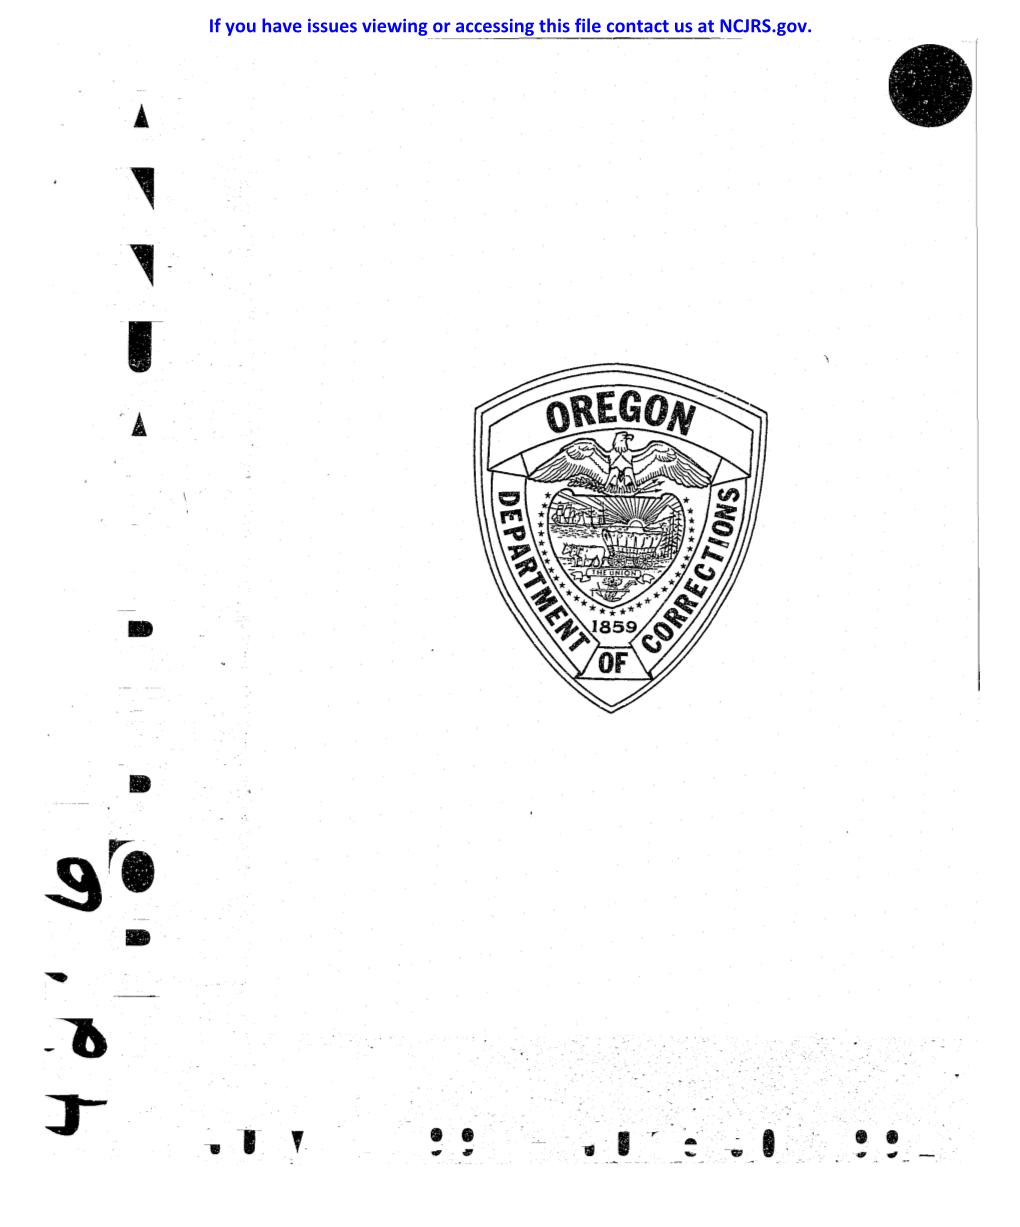 Community Corrections in Oregon